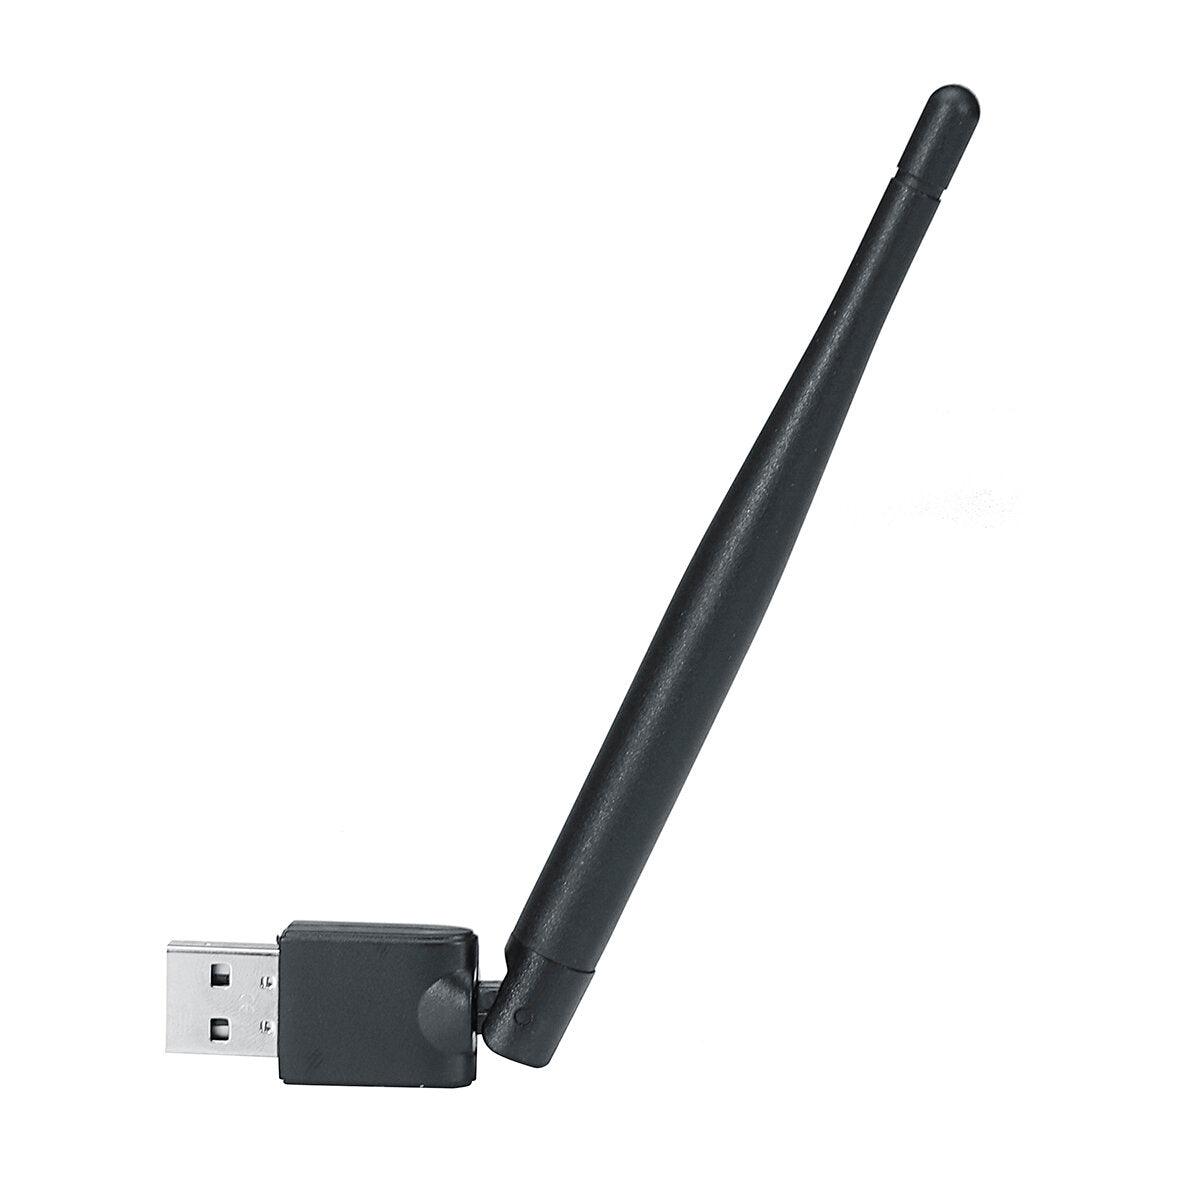 USB WIFI Adapter 150Mbps 2.4GHz Antenna USB 802.11n/g/b Ethernet Wi-Fi Dongle USB LAN Wireless Network Card for GTMEDIA PC TV Box